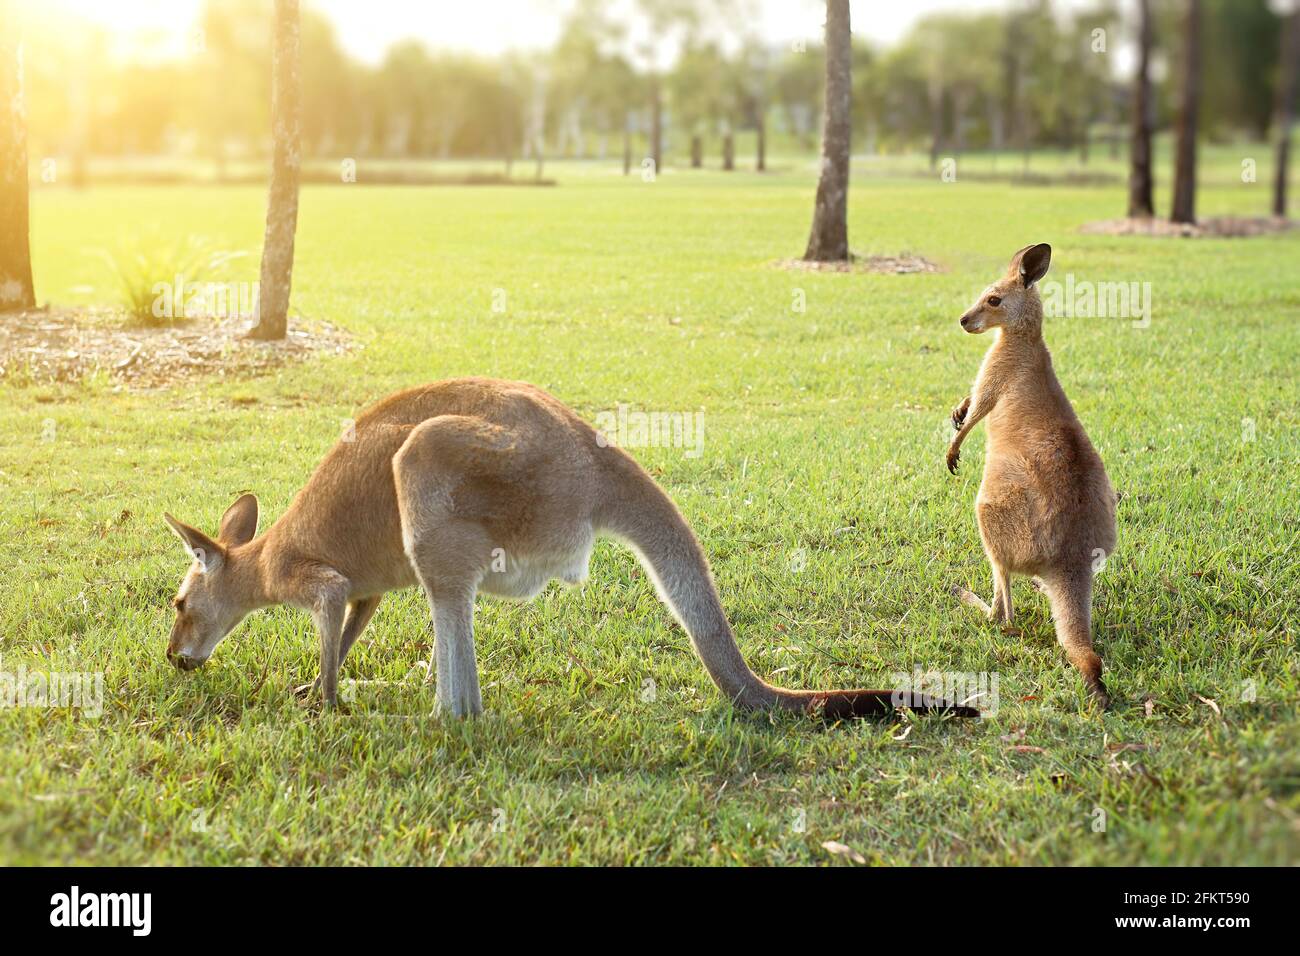 Australian kangaroos enjoying the afternoon sun in a park Stock Photo